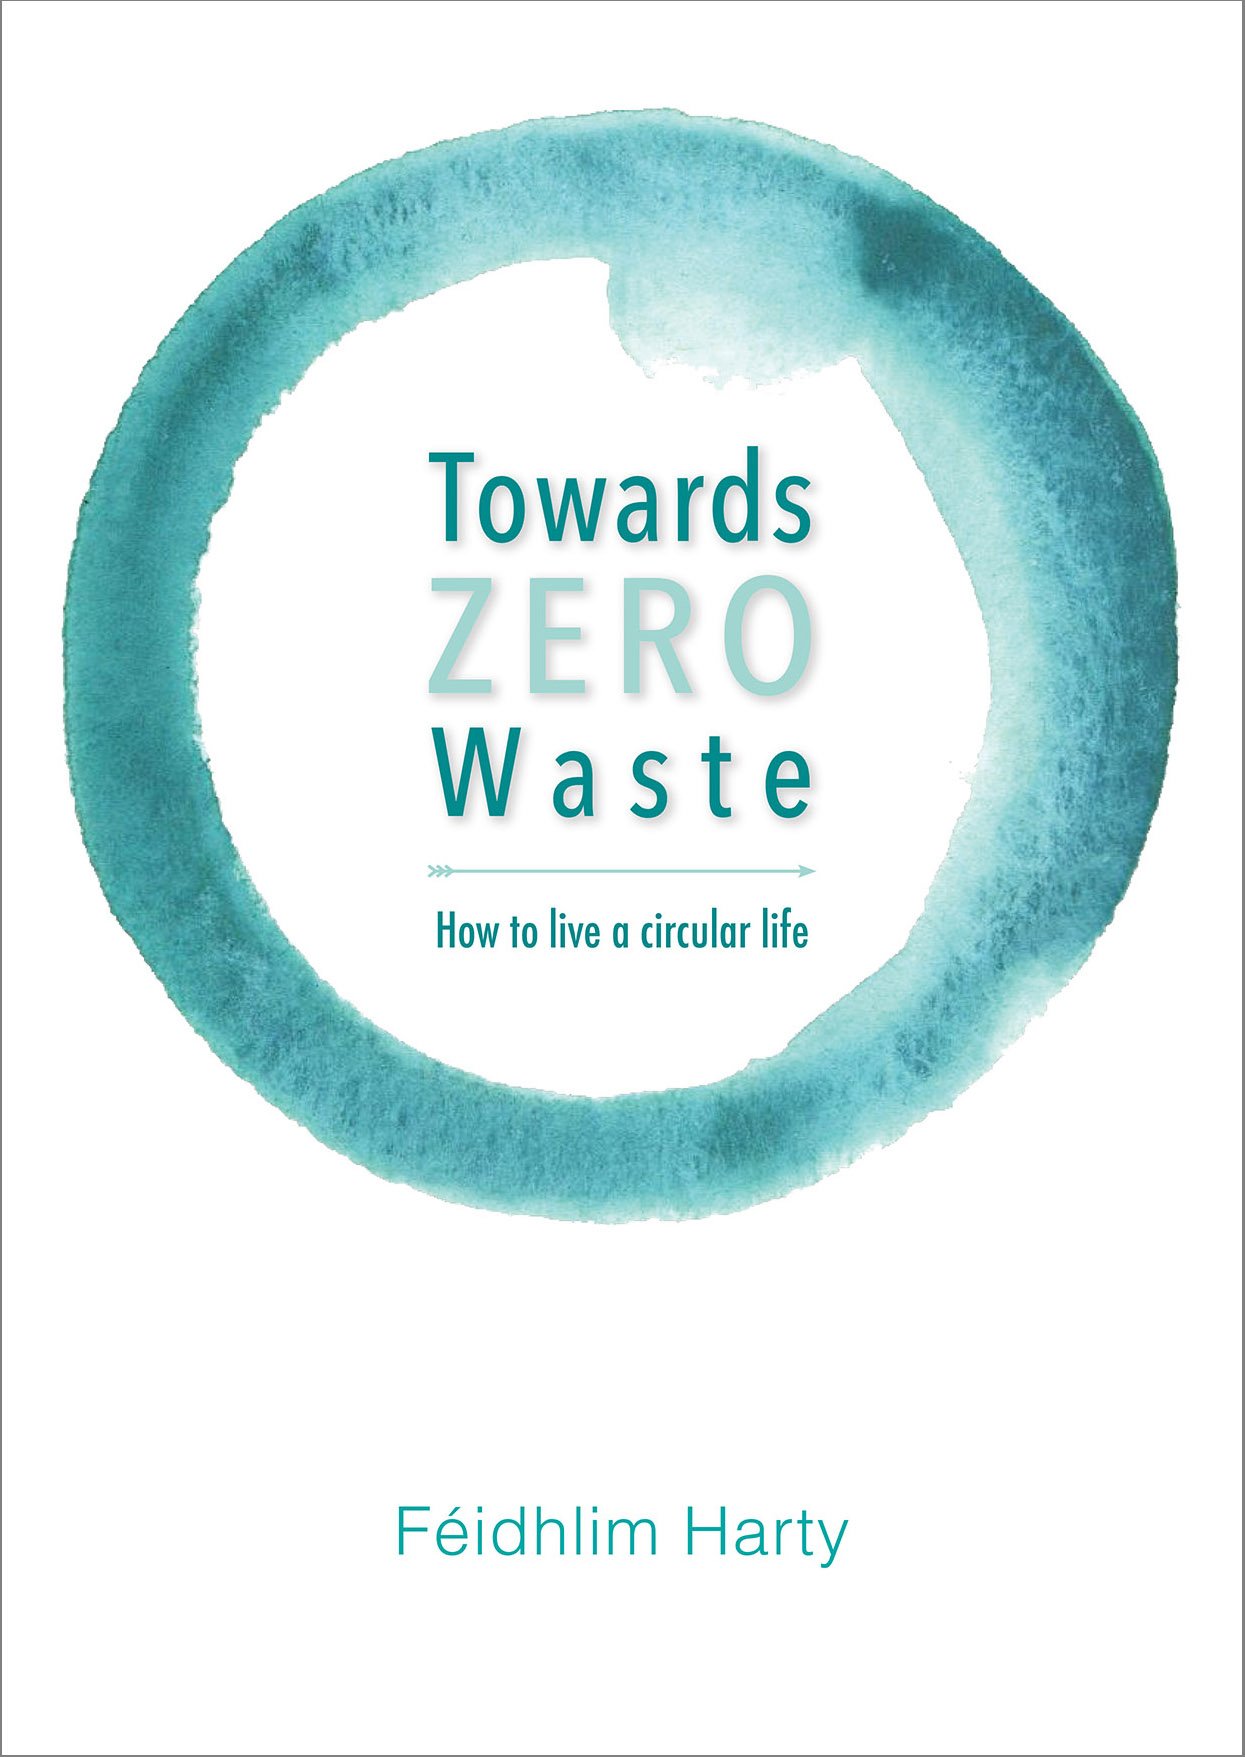 The Towards Zero Waste cover